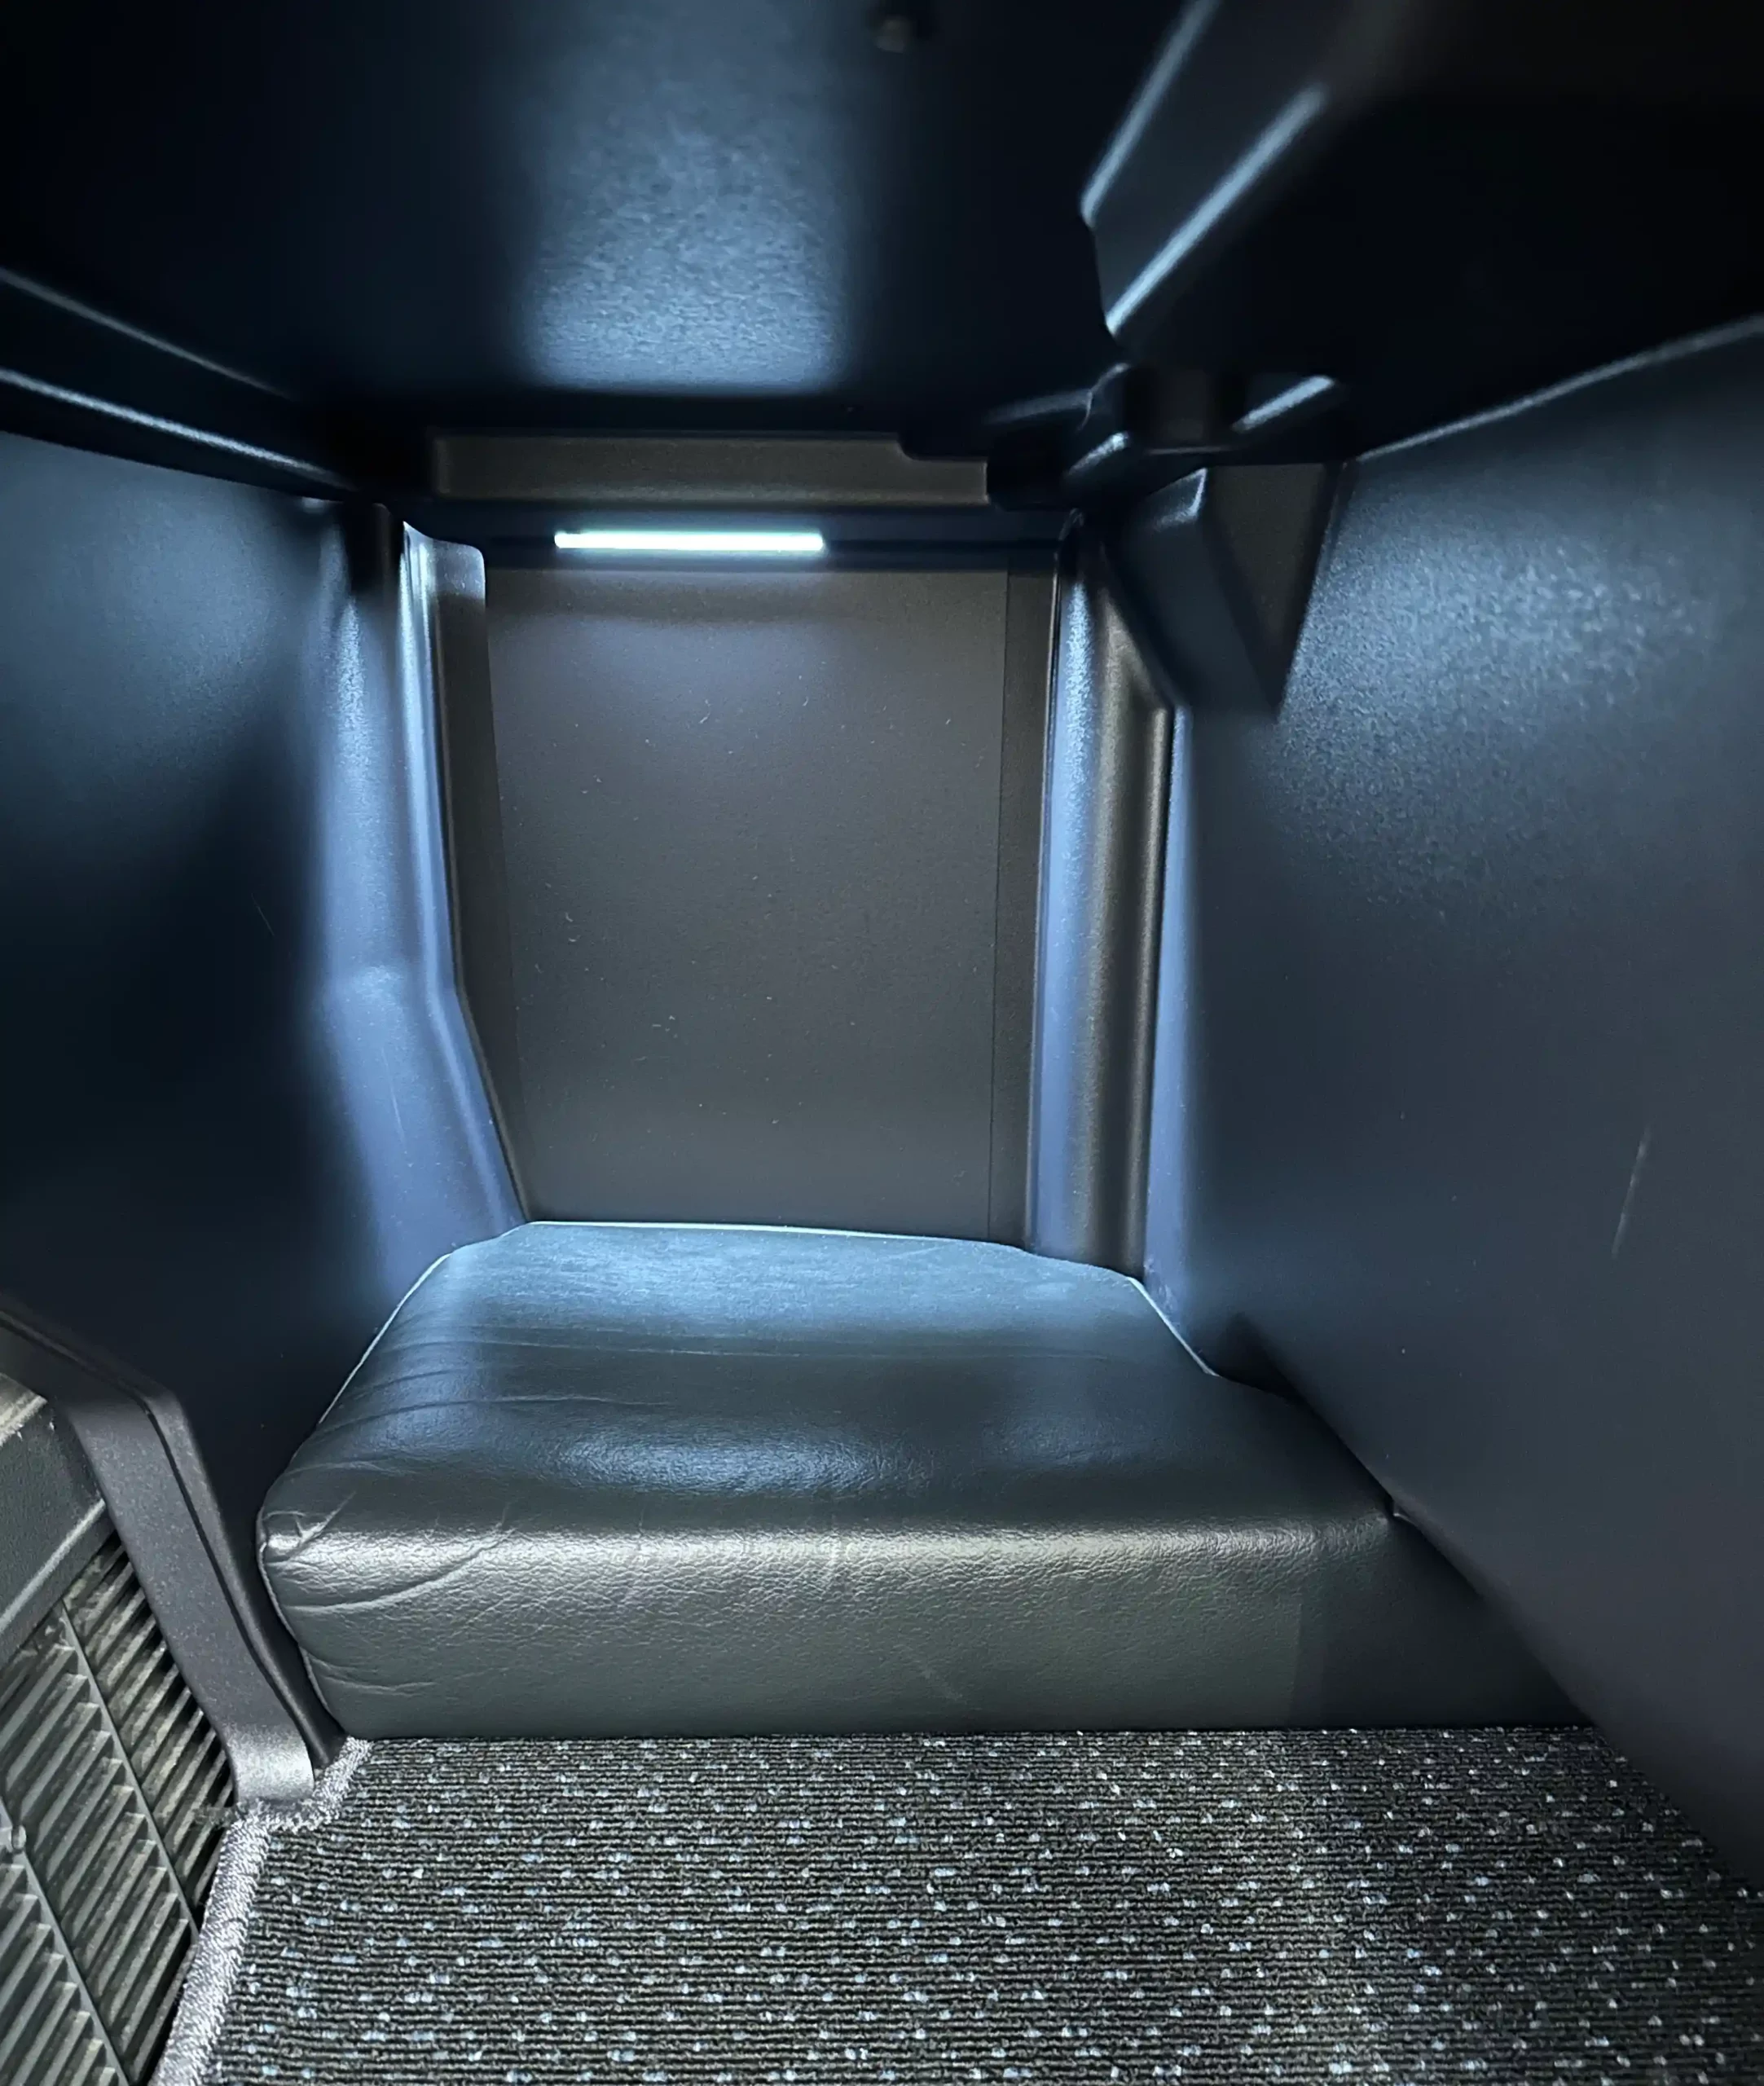 a seat inside a vehicle